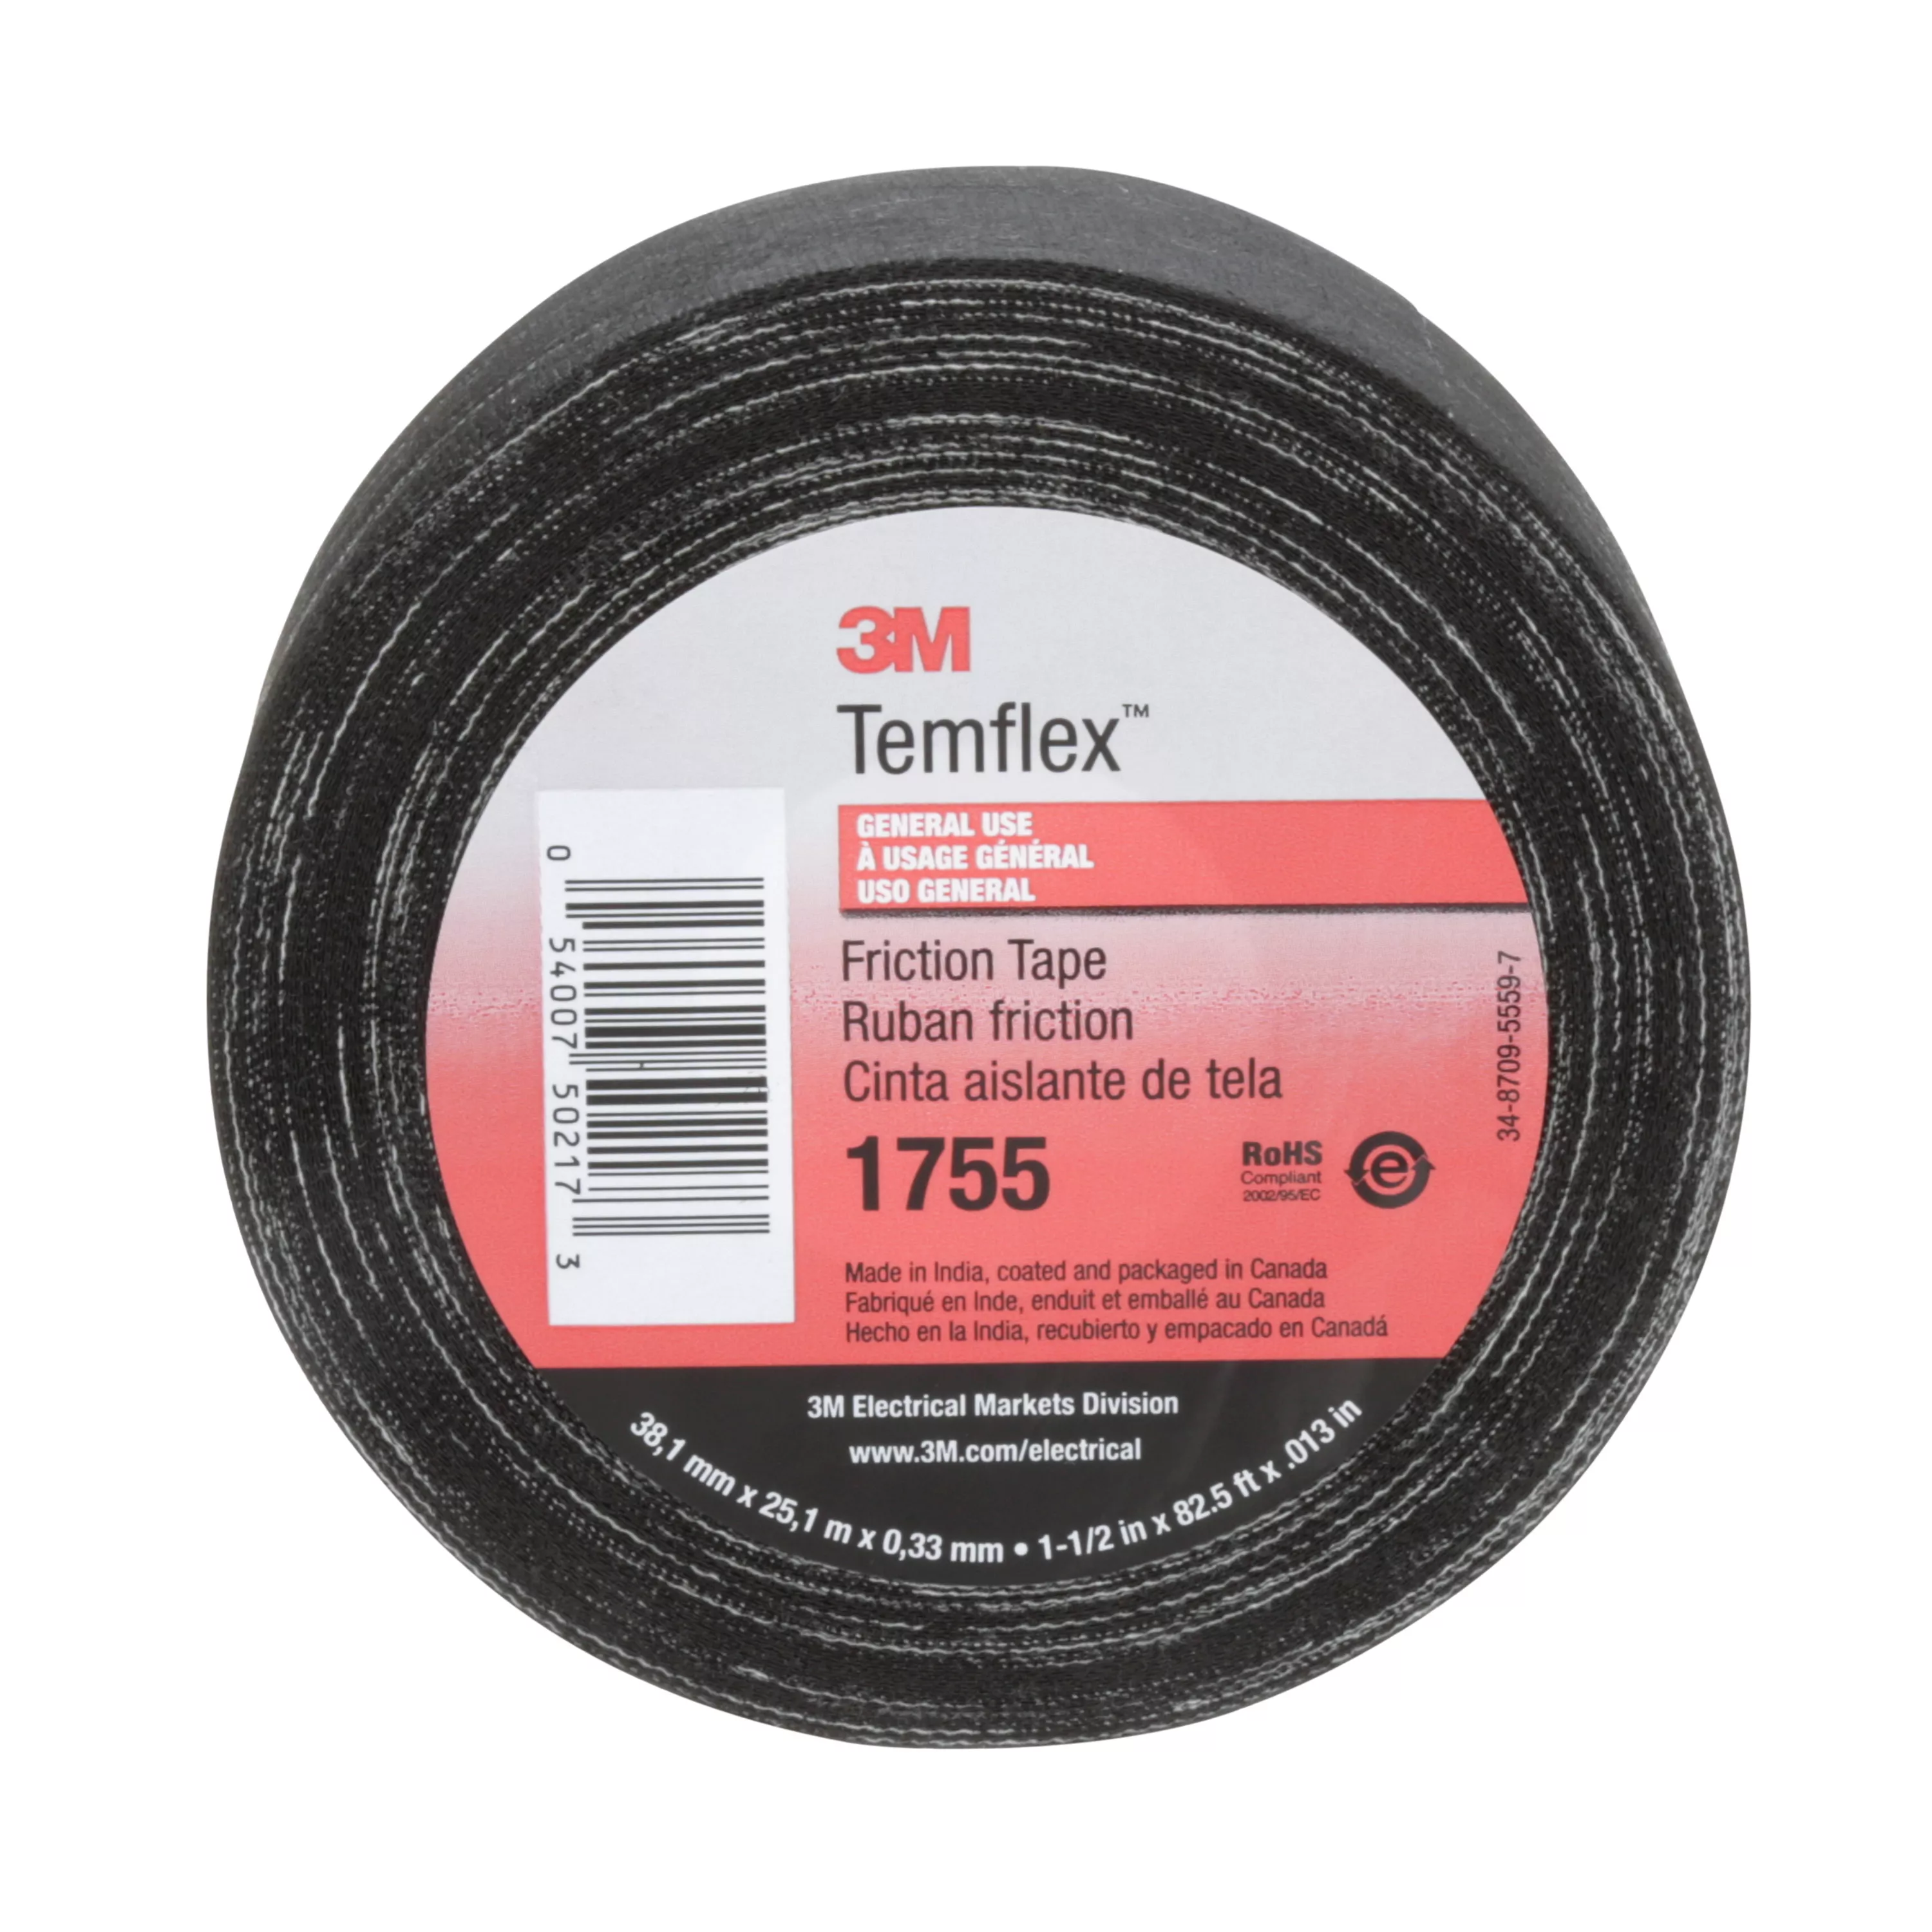 SKU 7100009255 | 3M™ Temflex™ Cotton Friction Tape 1755